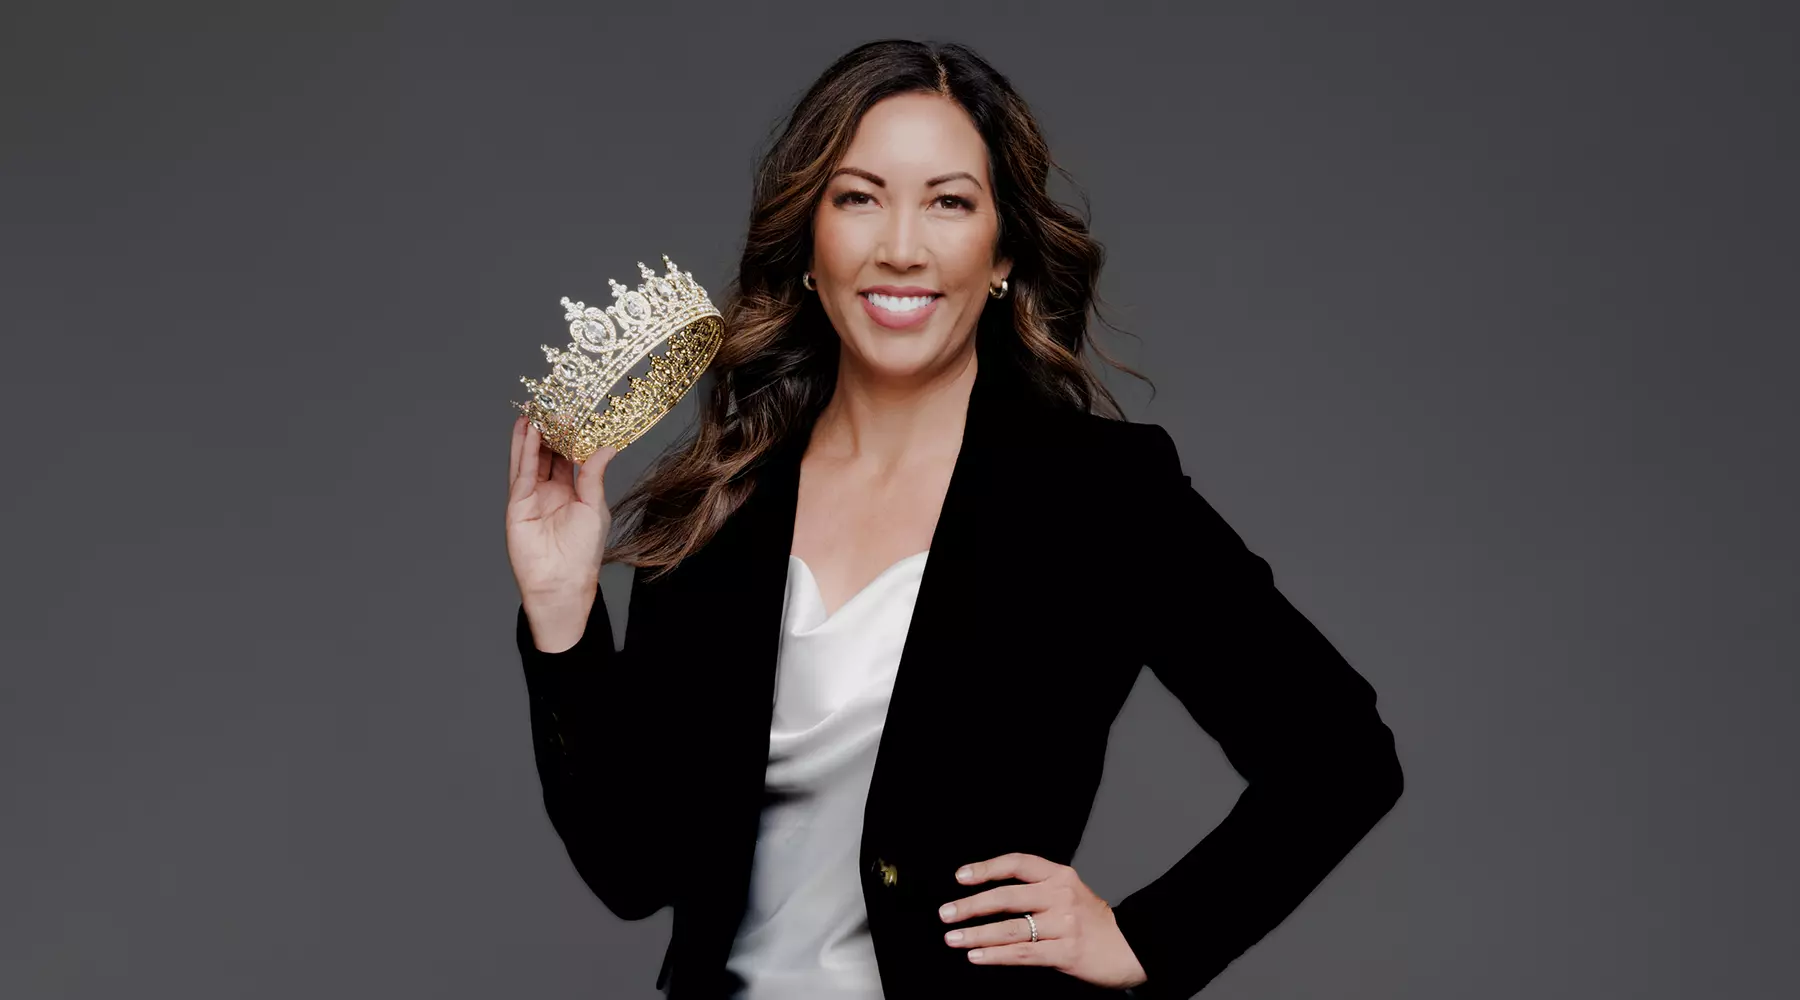 Dr. Kristin Kratzer Holding a Crown